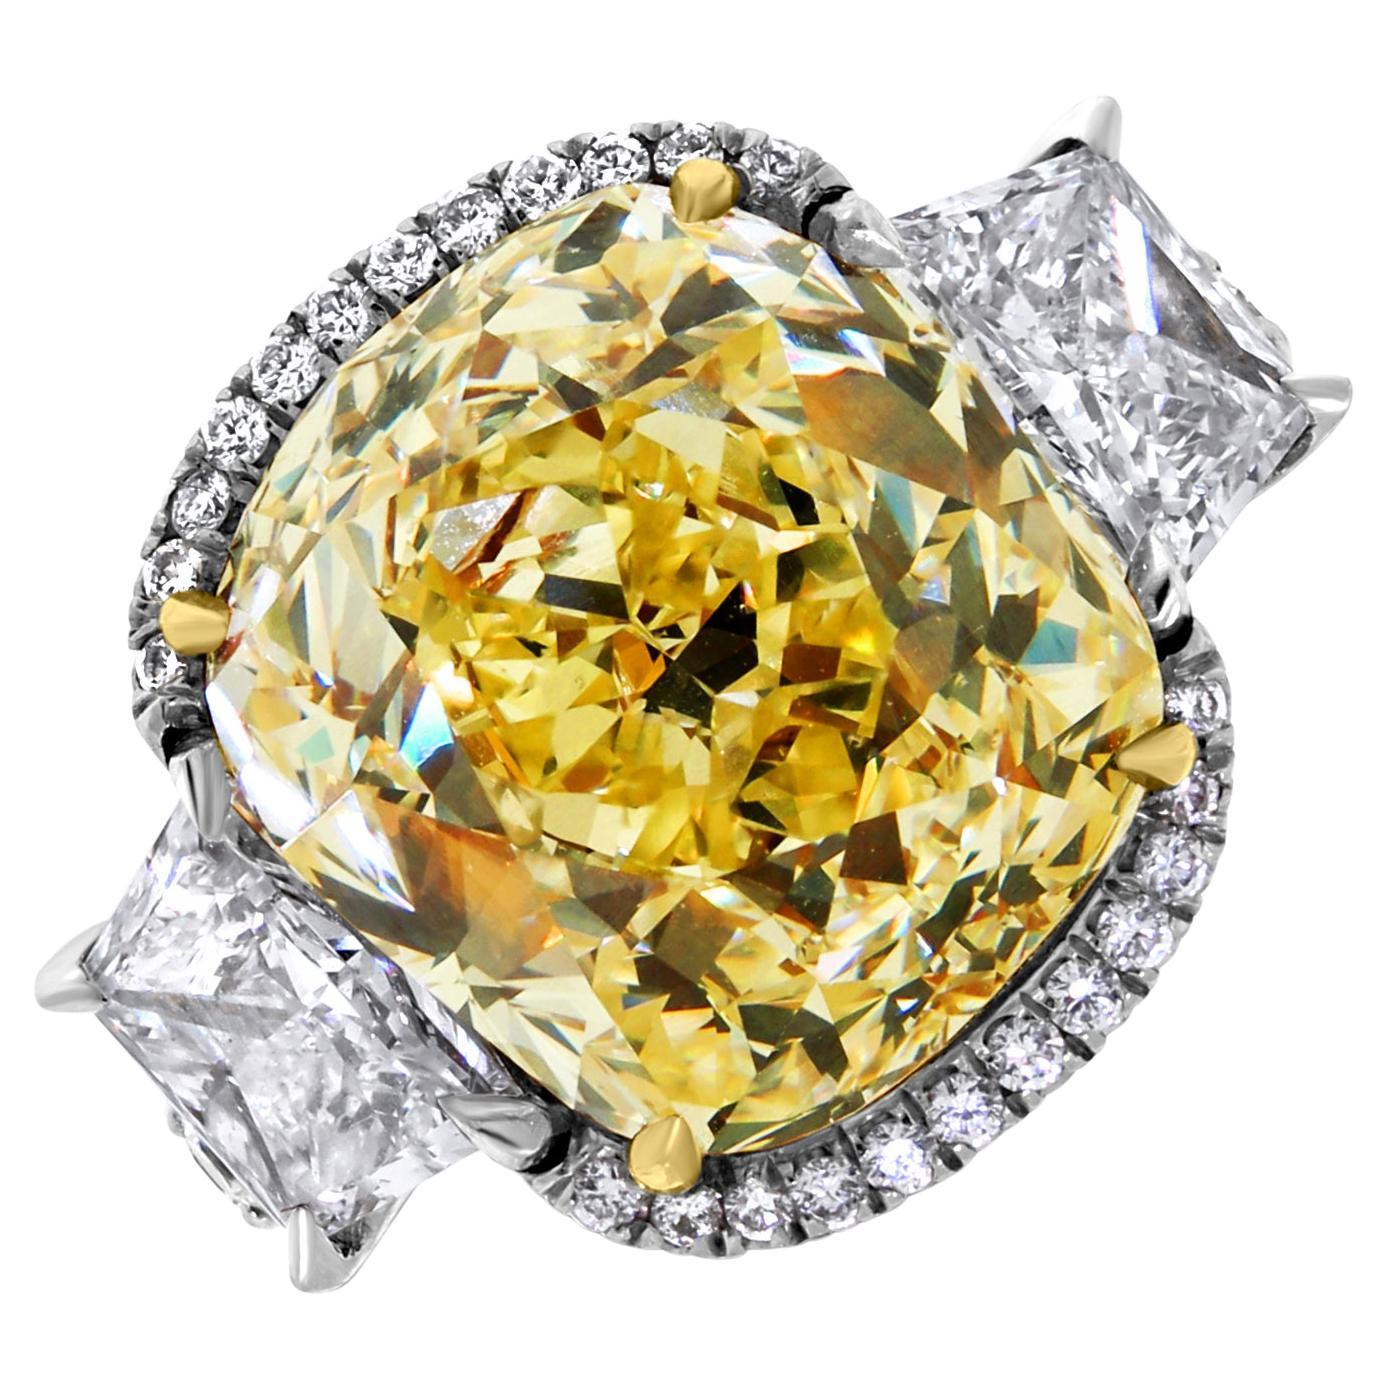 Beauvince Elan Ring 9.77 carat Cushion Fancy Yellow VS1 GIA Diamond in Platinum